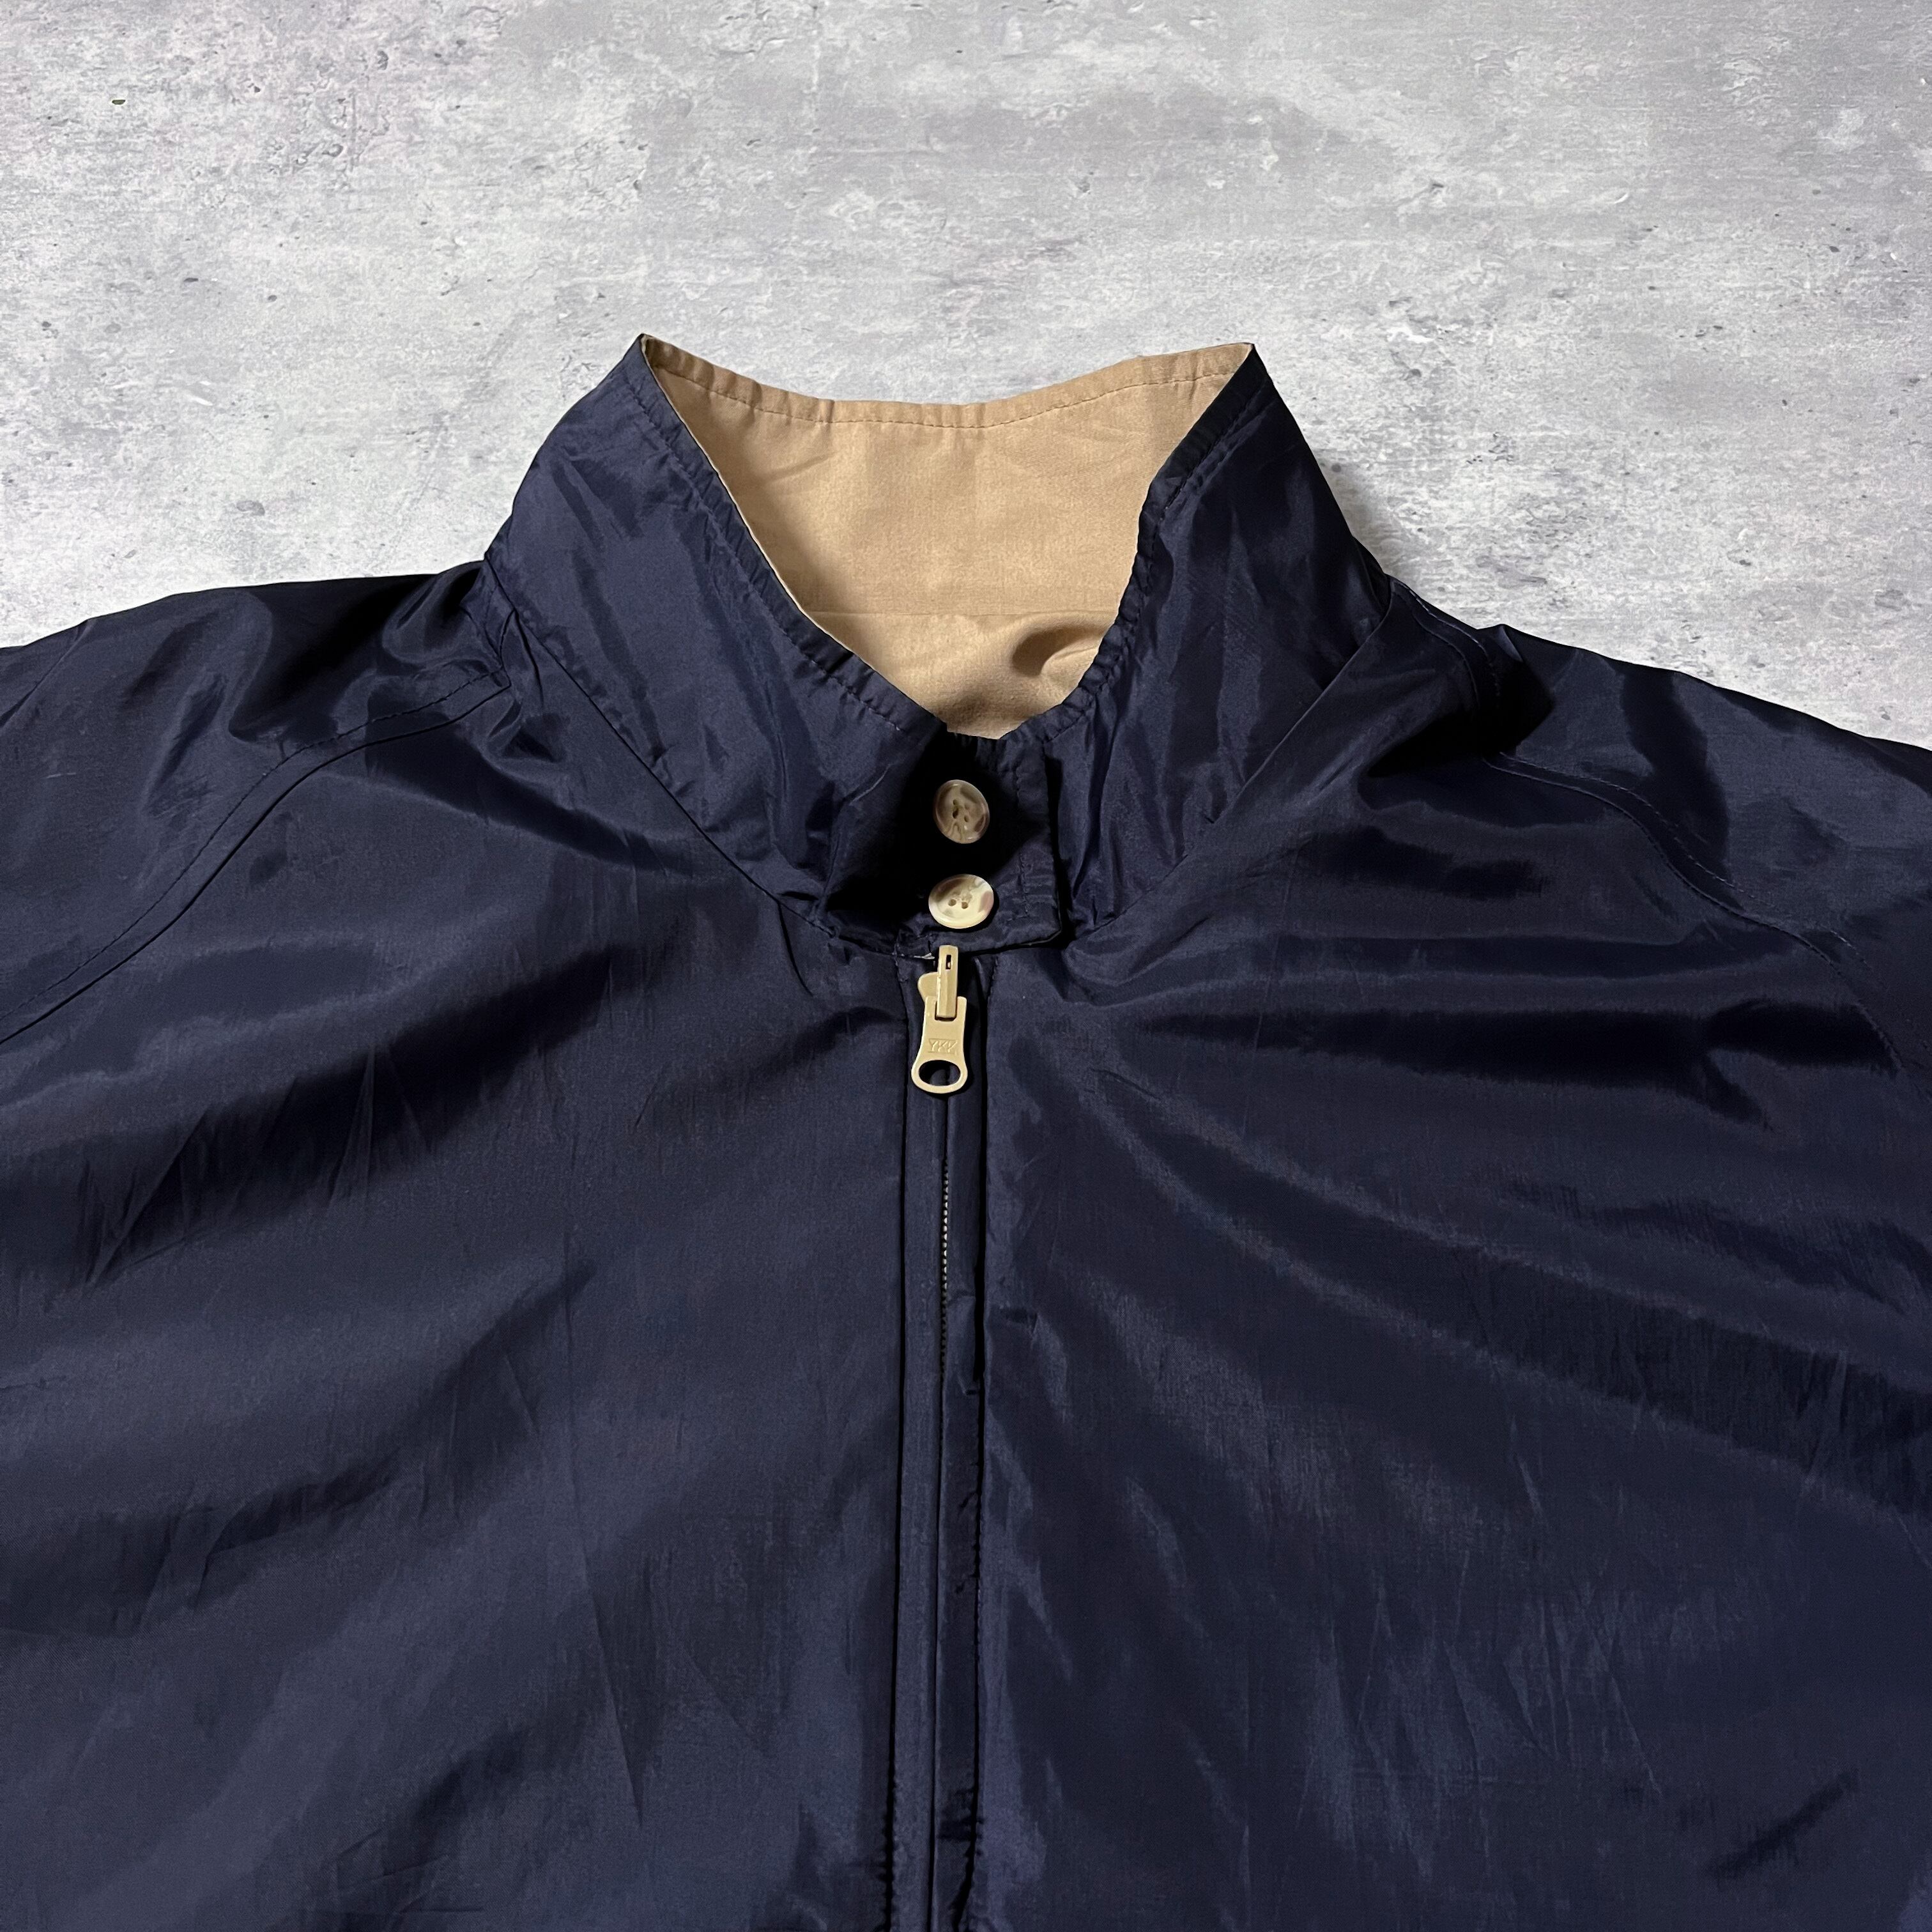 90s “Land's End” G9 type harrington jacket ランズエンド G9 